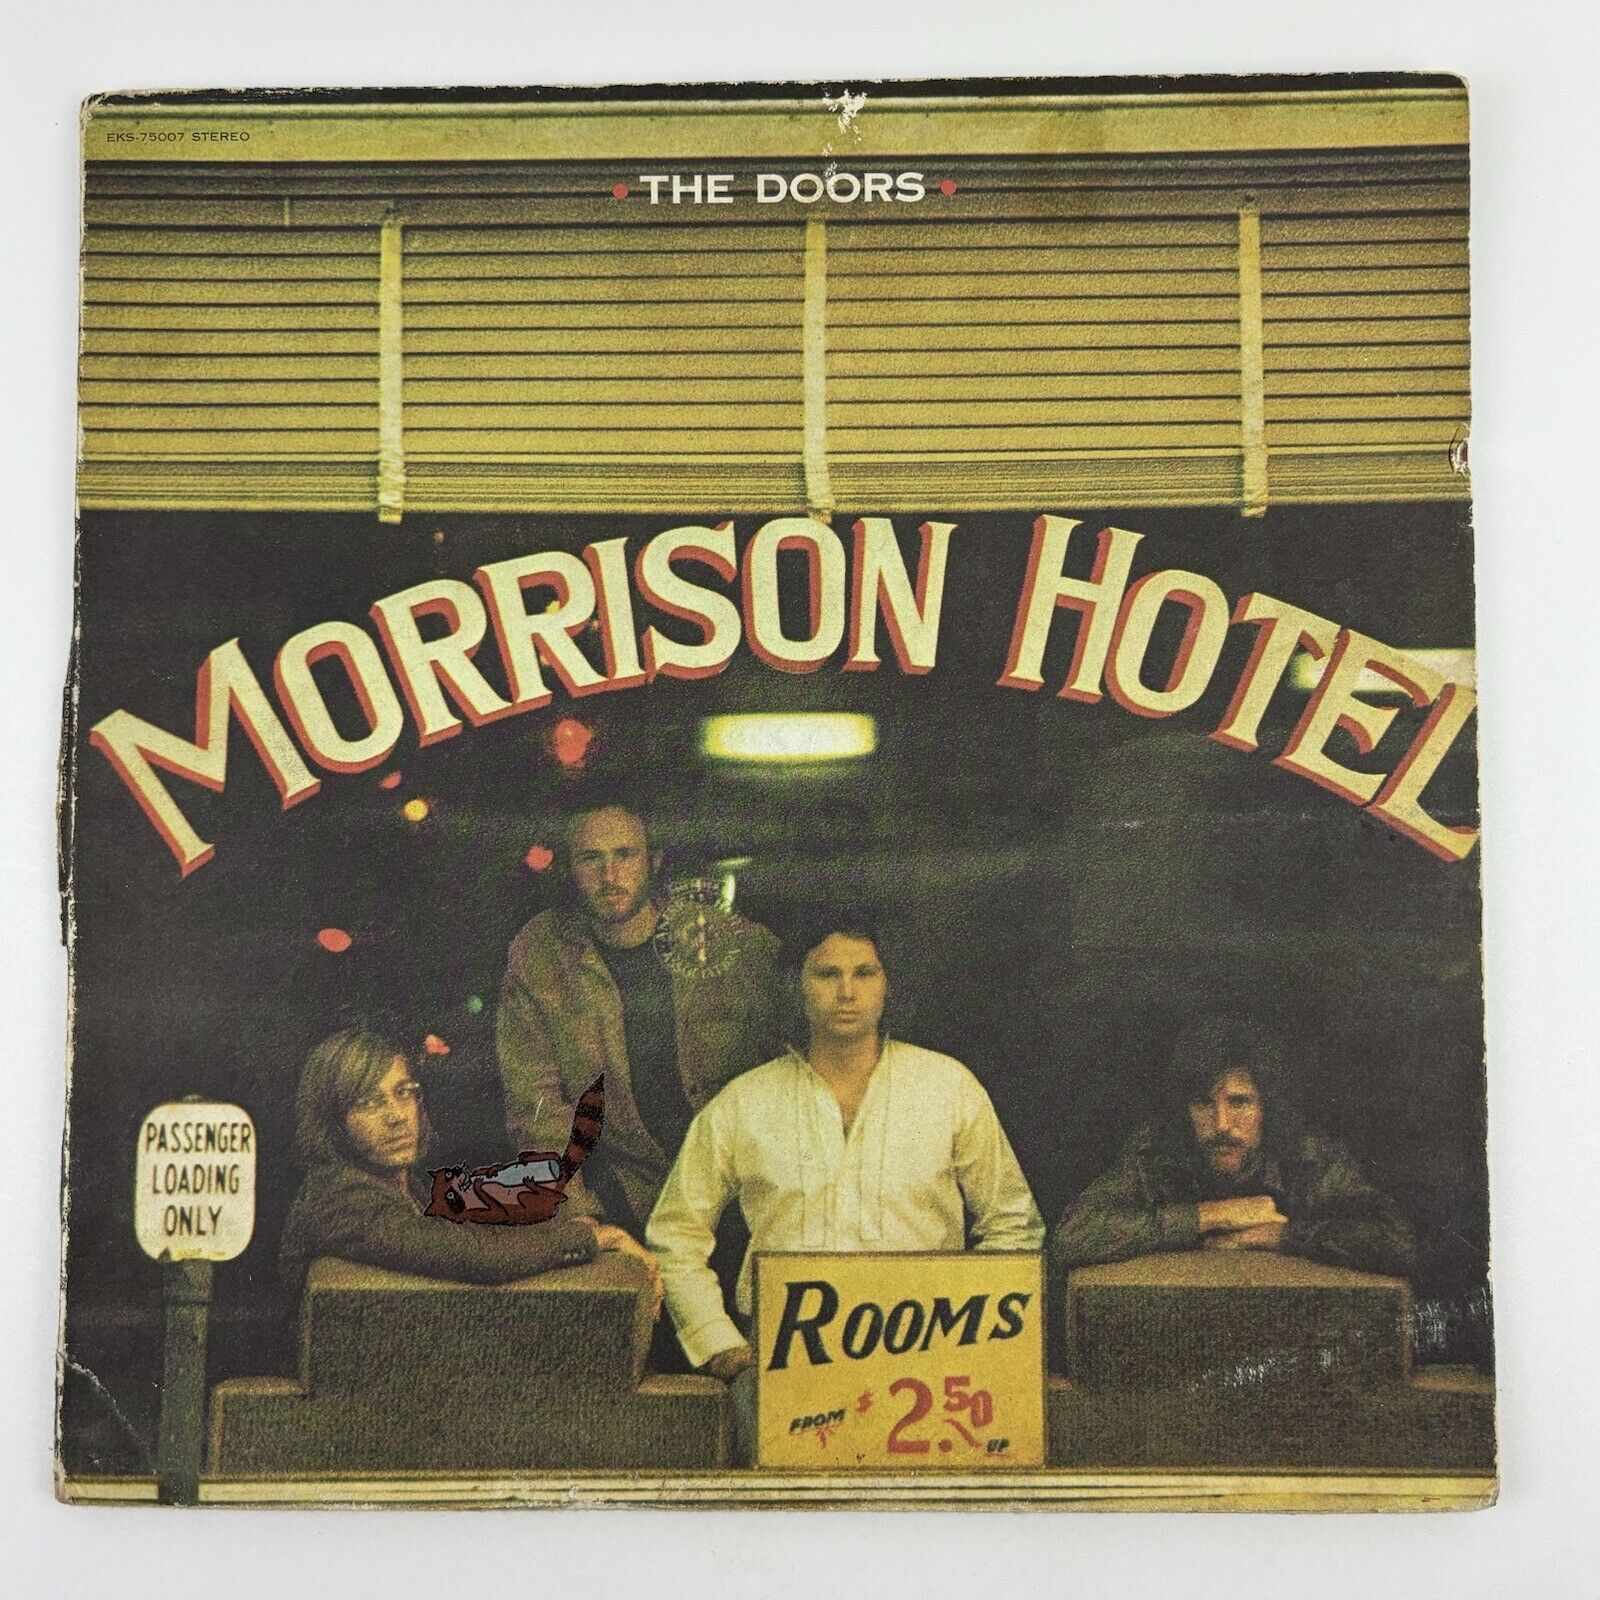 The Doors: Hard Rock Cafe, Morrison Hotel Vinyl LP 1970